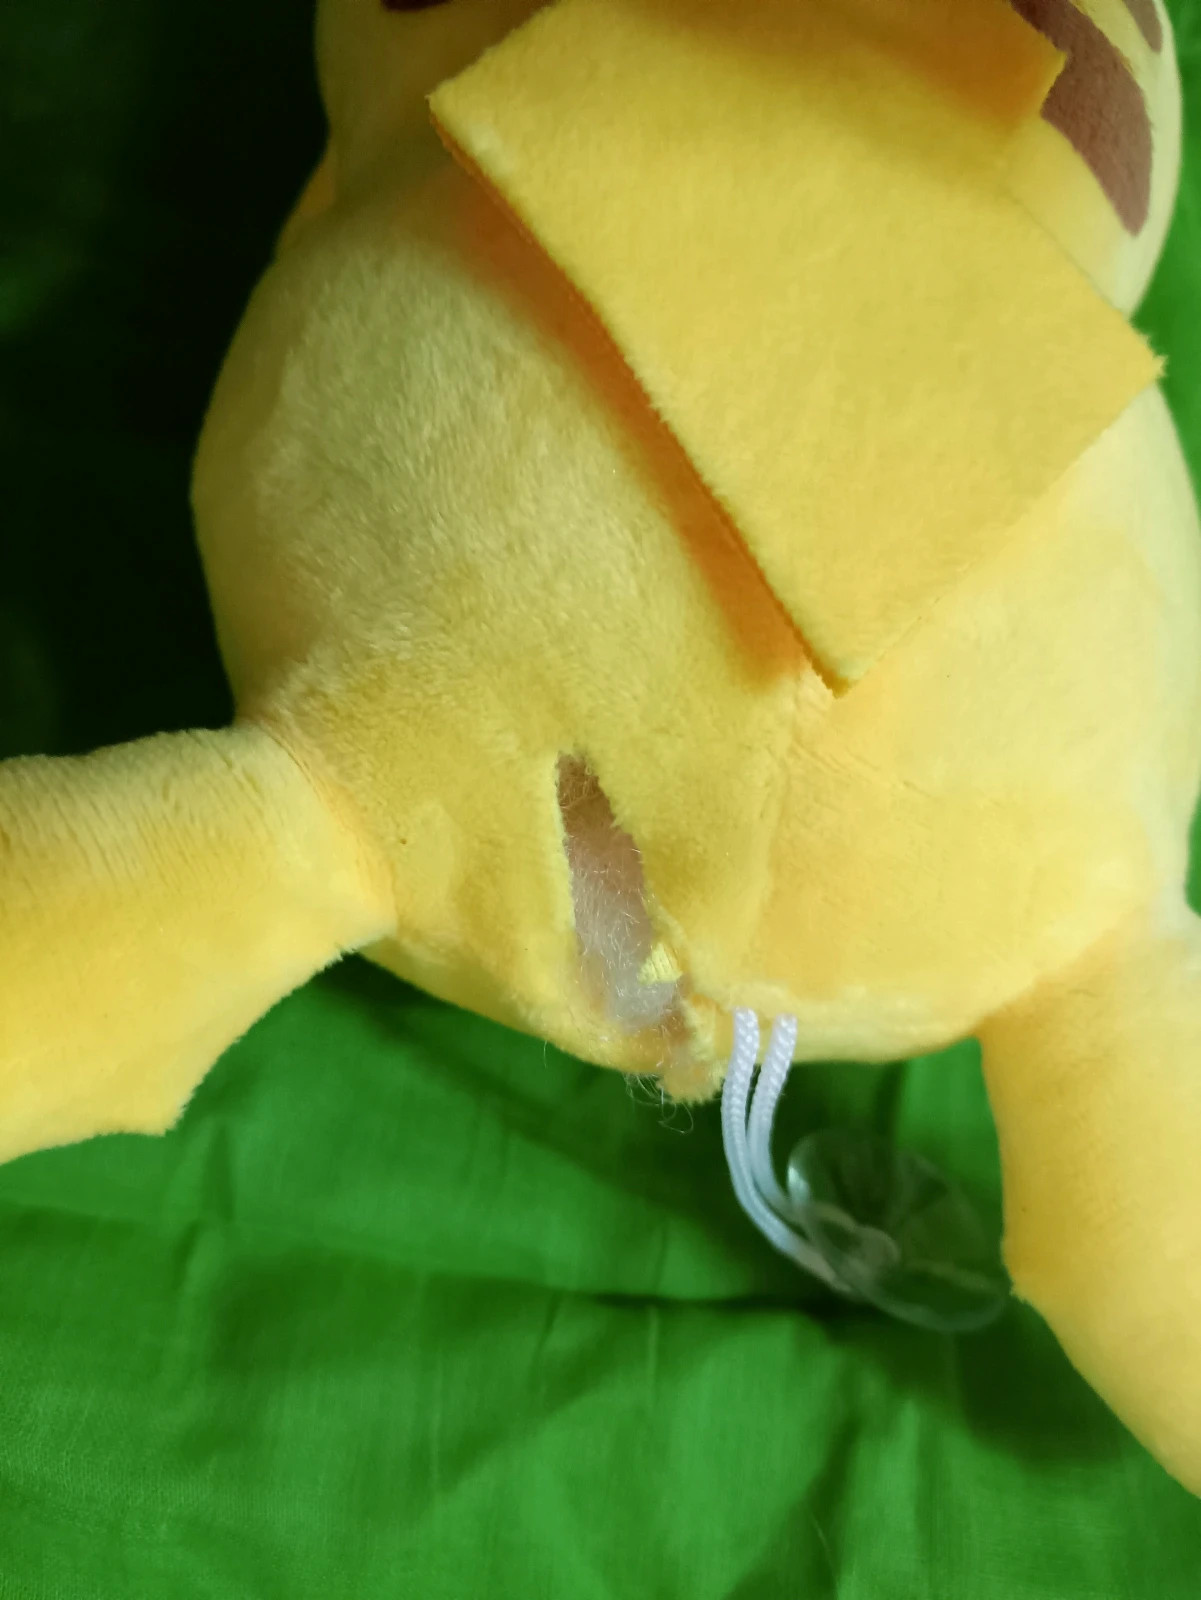 POKEMON - Pikachu chapeau estival - Peluche 20 cm - Mangalisa